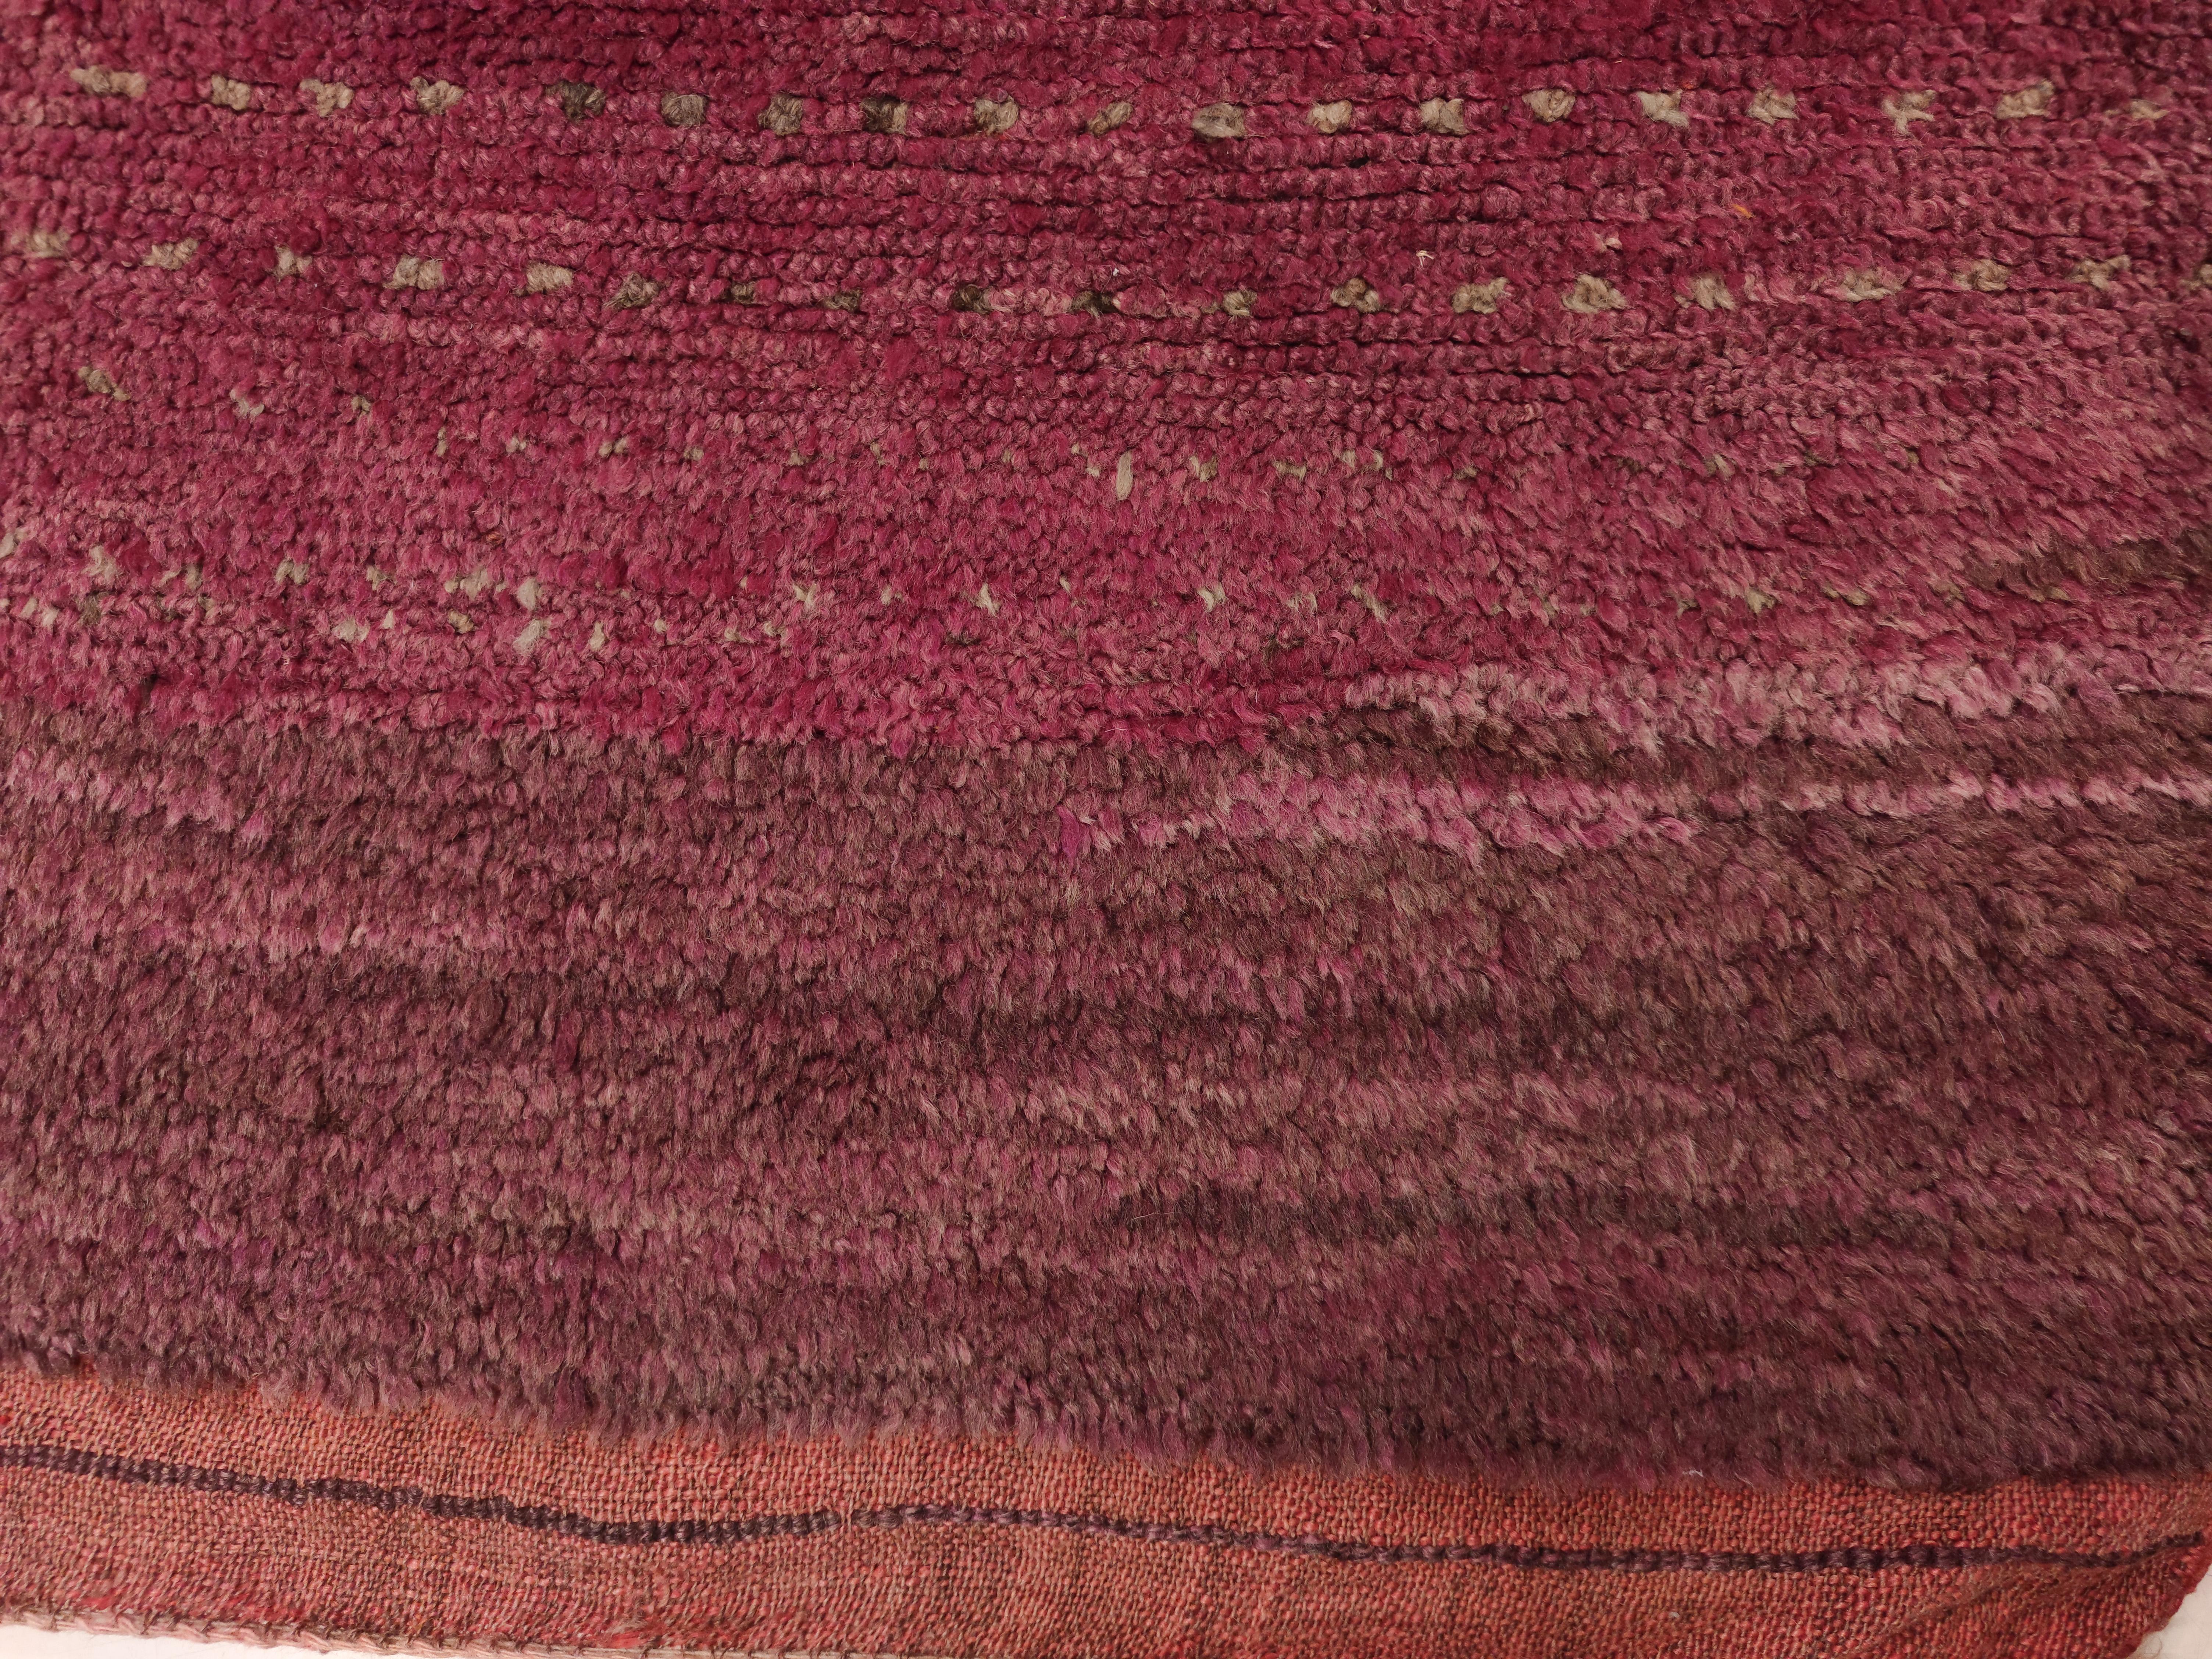 Superlative Vintage Beni Mguild Berber Carpet In Excellent Condition For Sale In Milan, IT